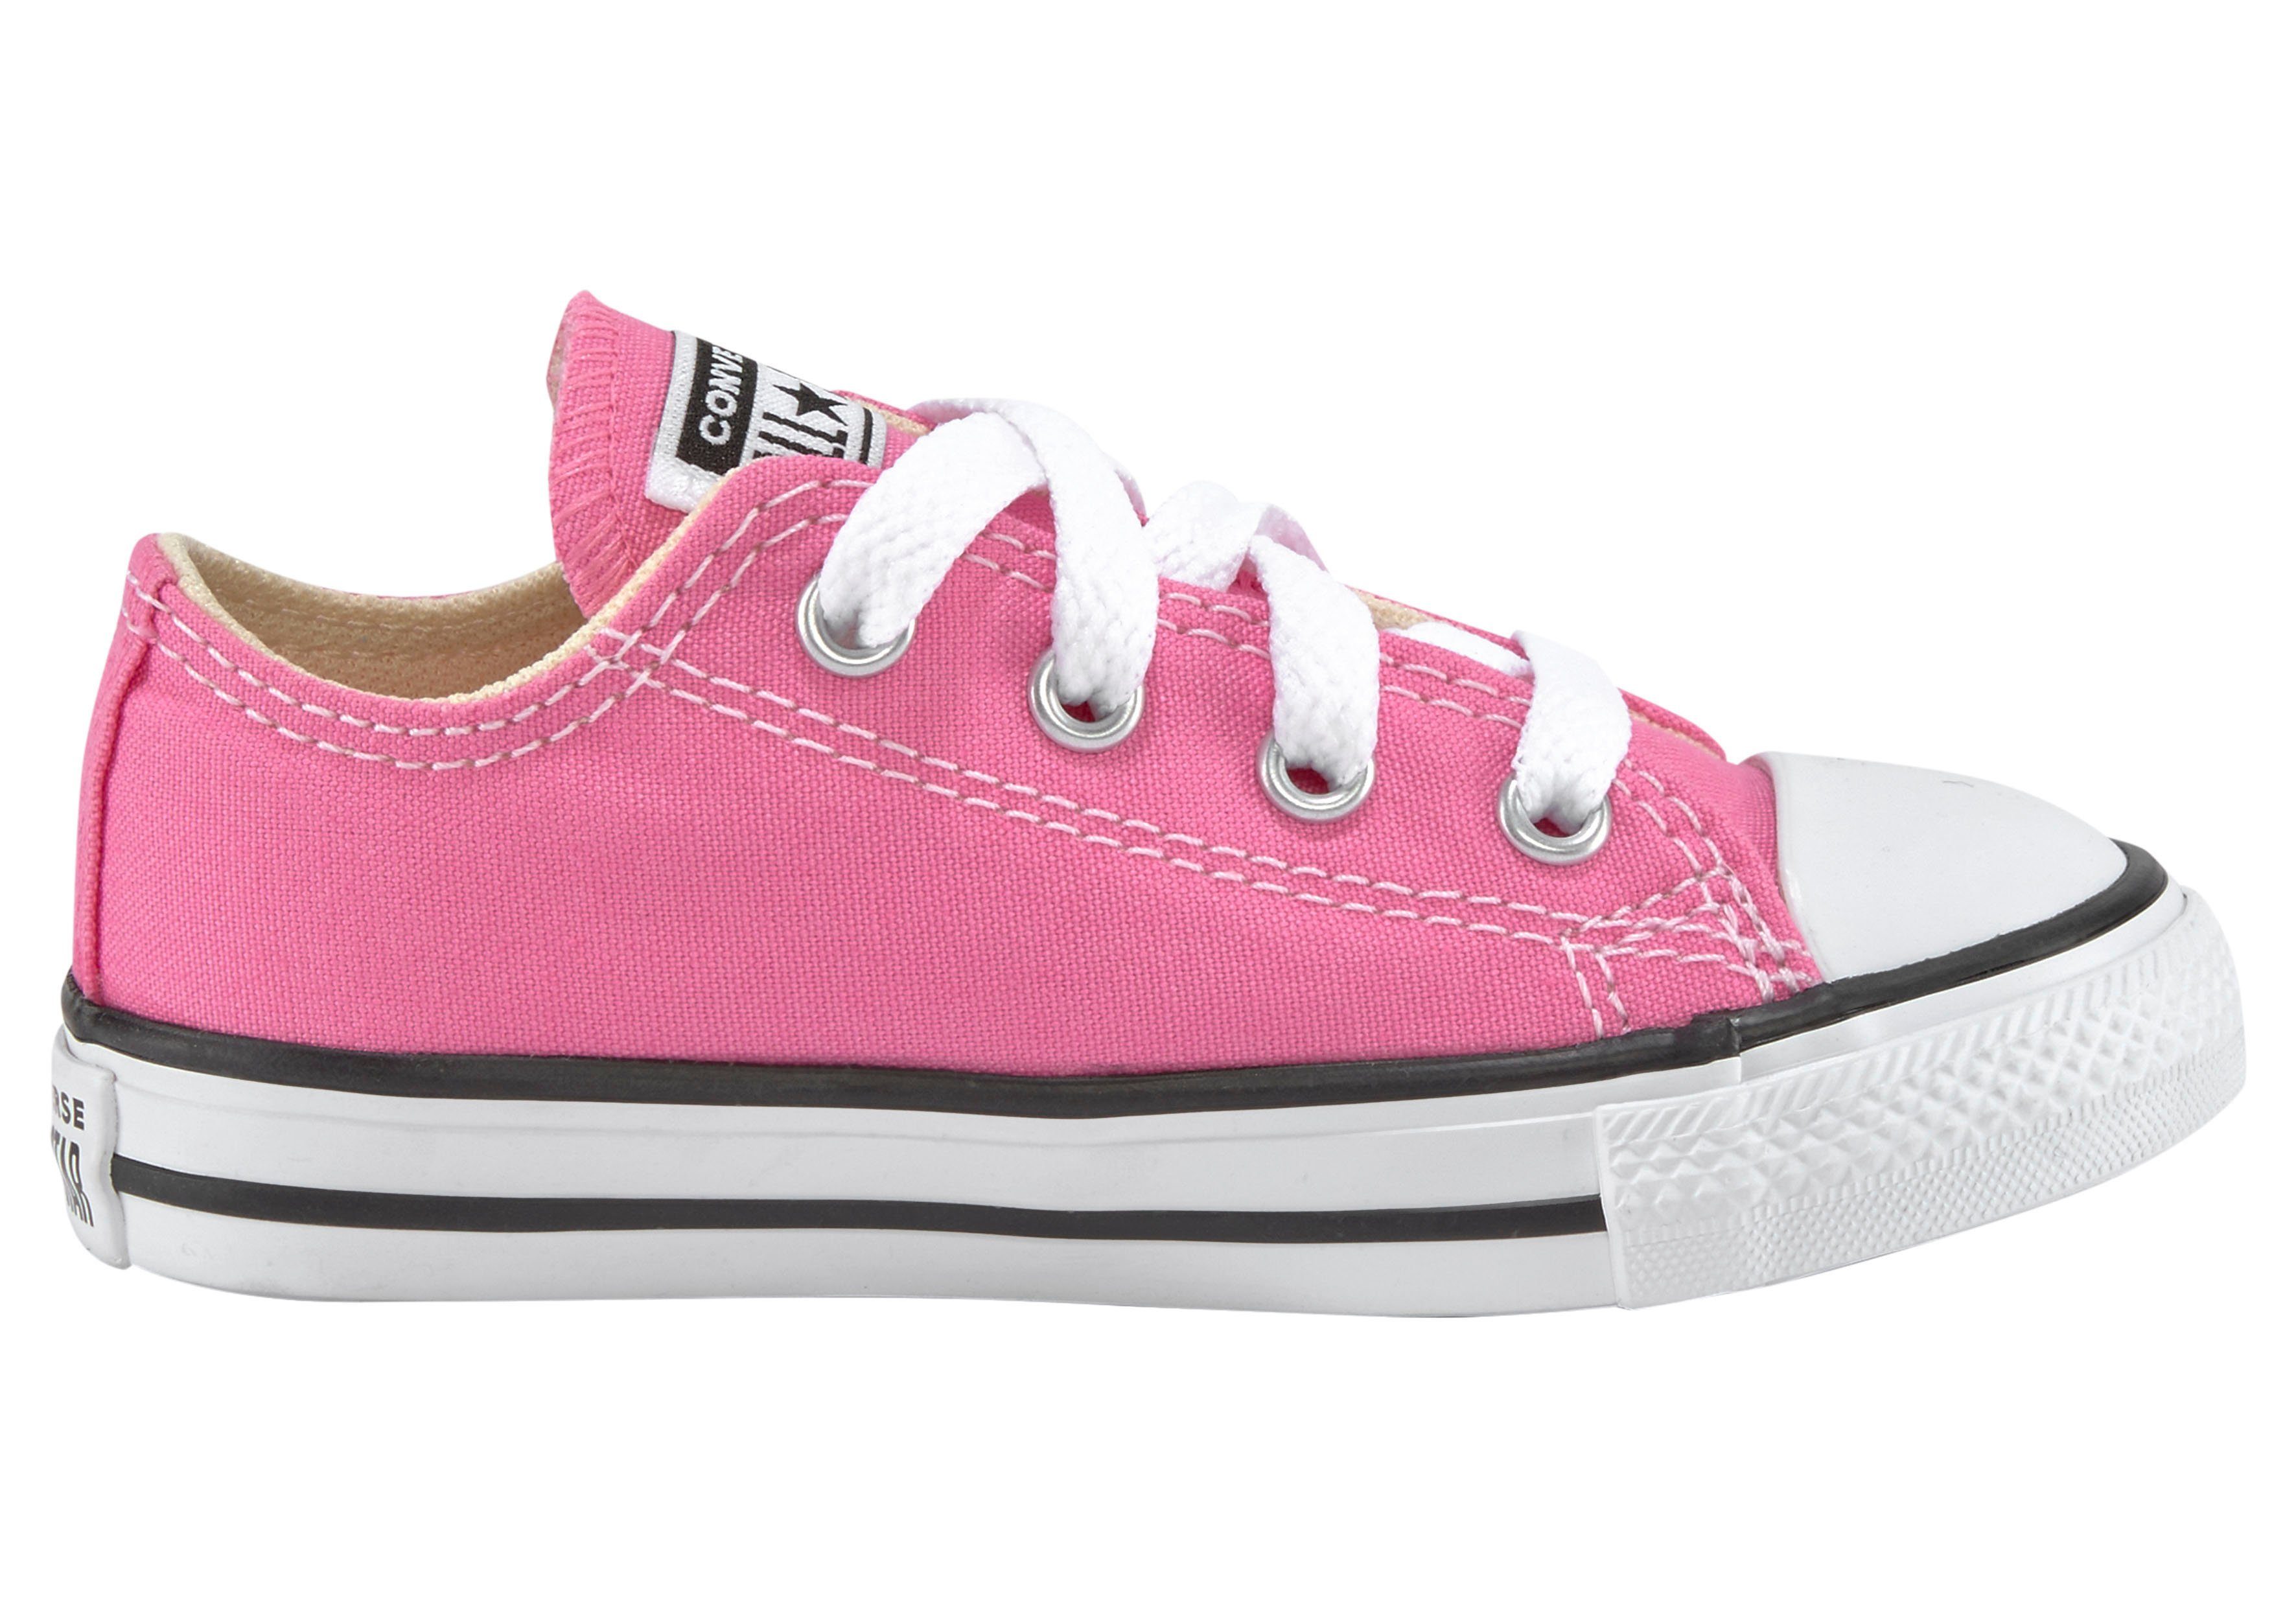 Converse CHUCK TAYLOR ALL STAR für Kinder OX rosa Sneaker